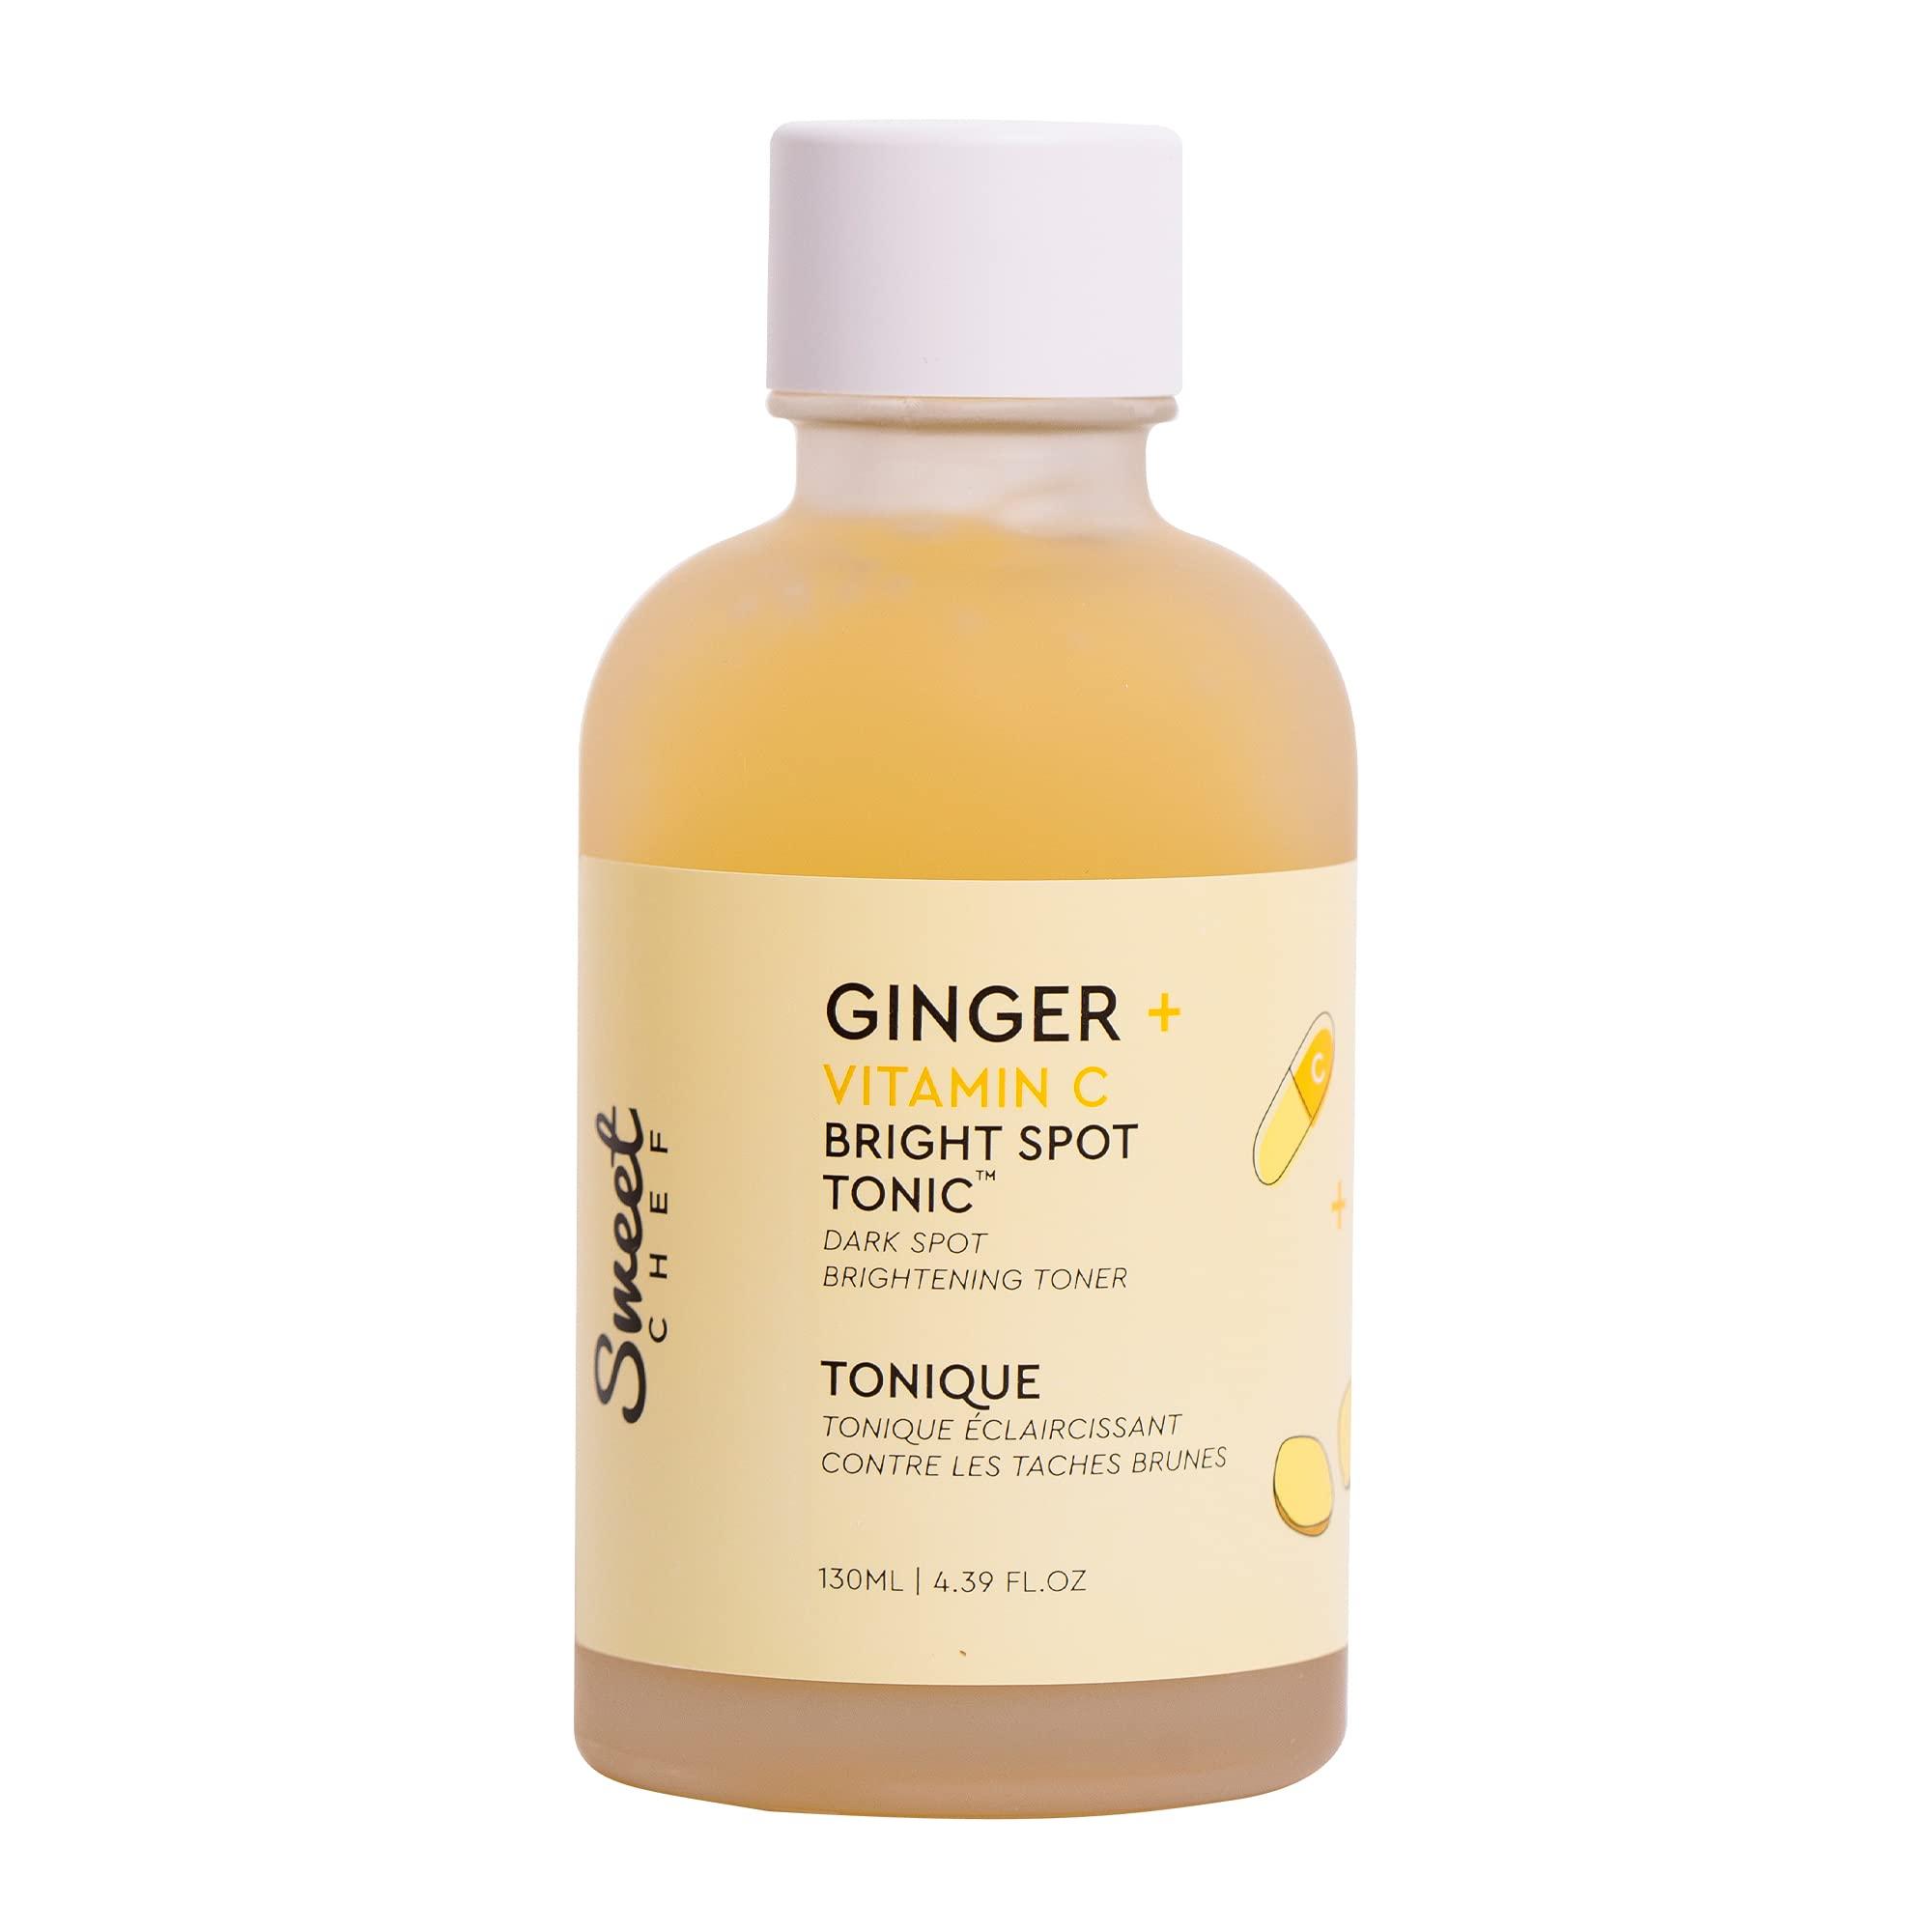 Ginger + Vitamin C Bright Spot Tonic